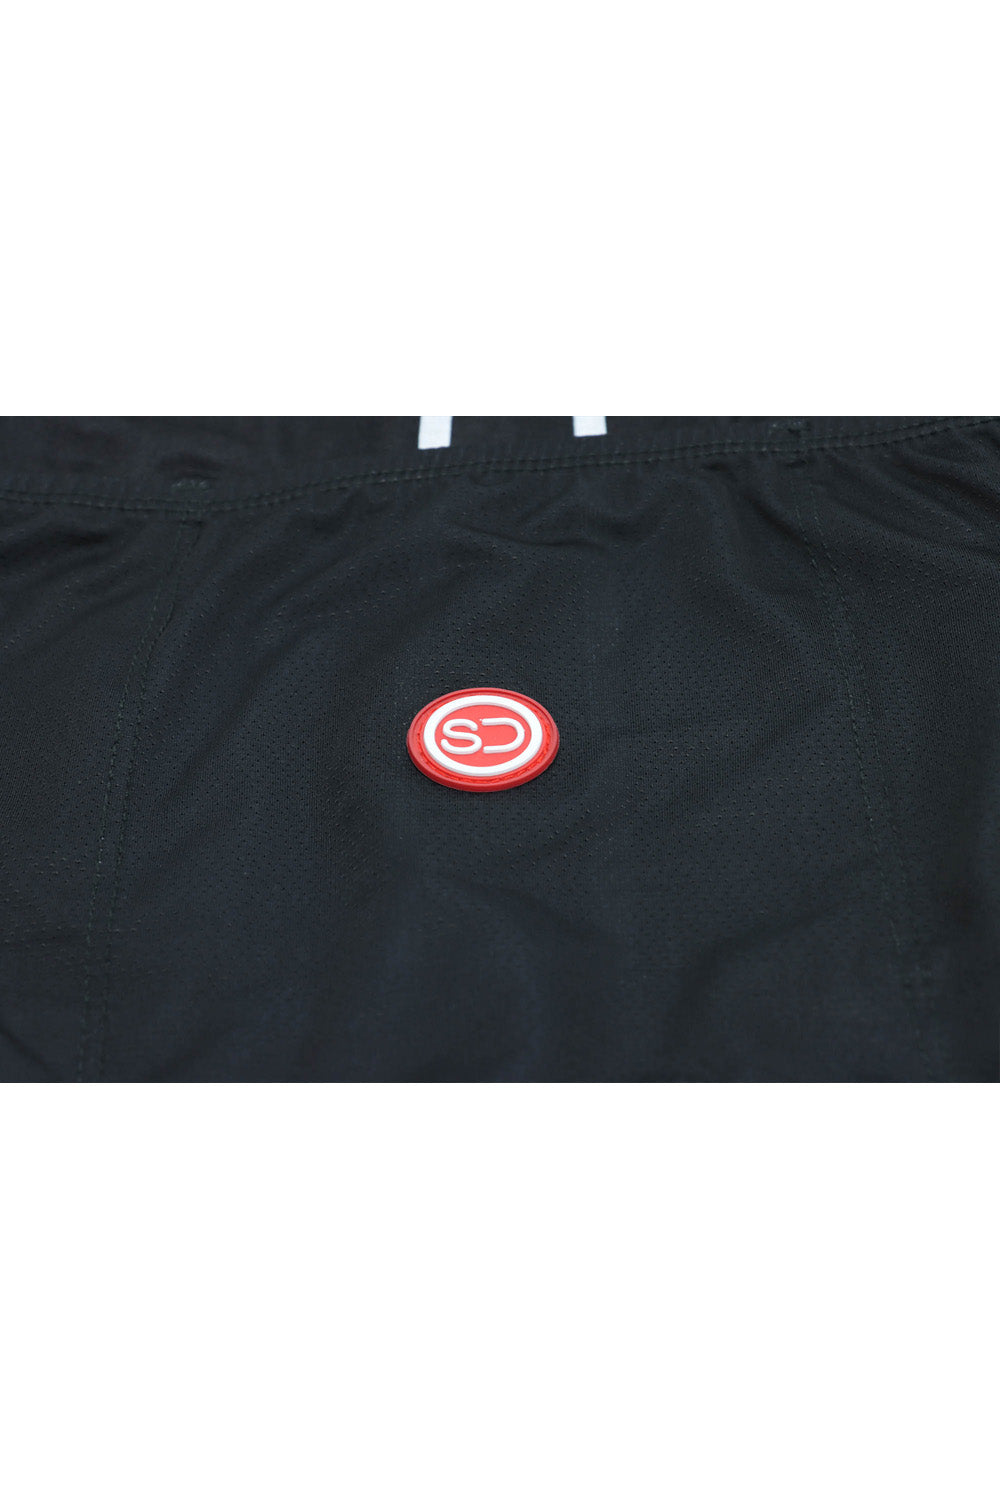 Sundried Pro Men's Black Long Sleeve Cycle Jersey Long Sleeve Jersey Activewear